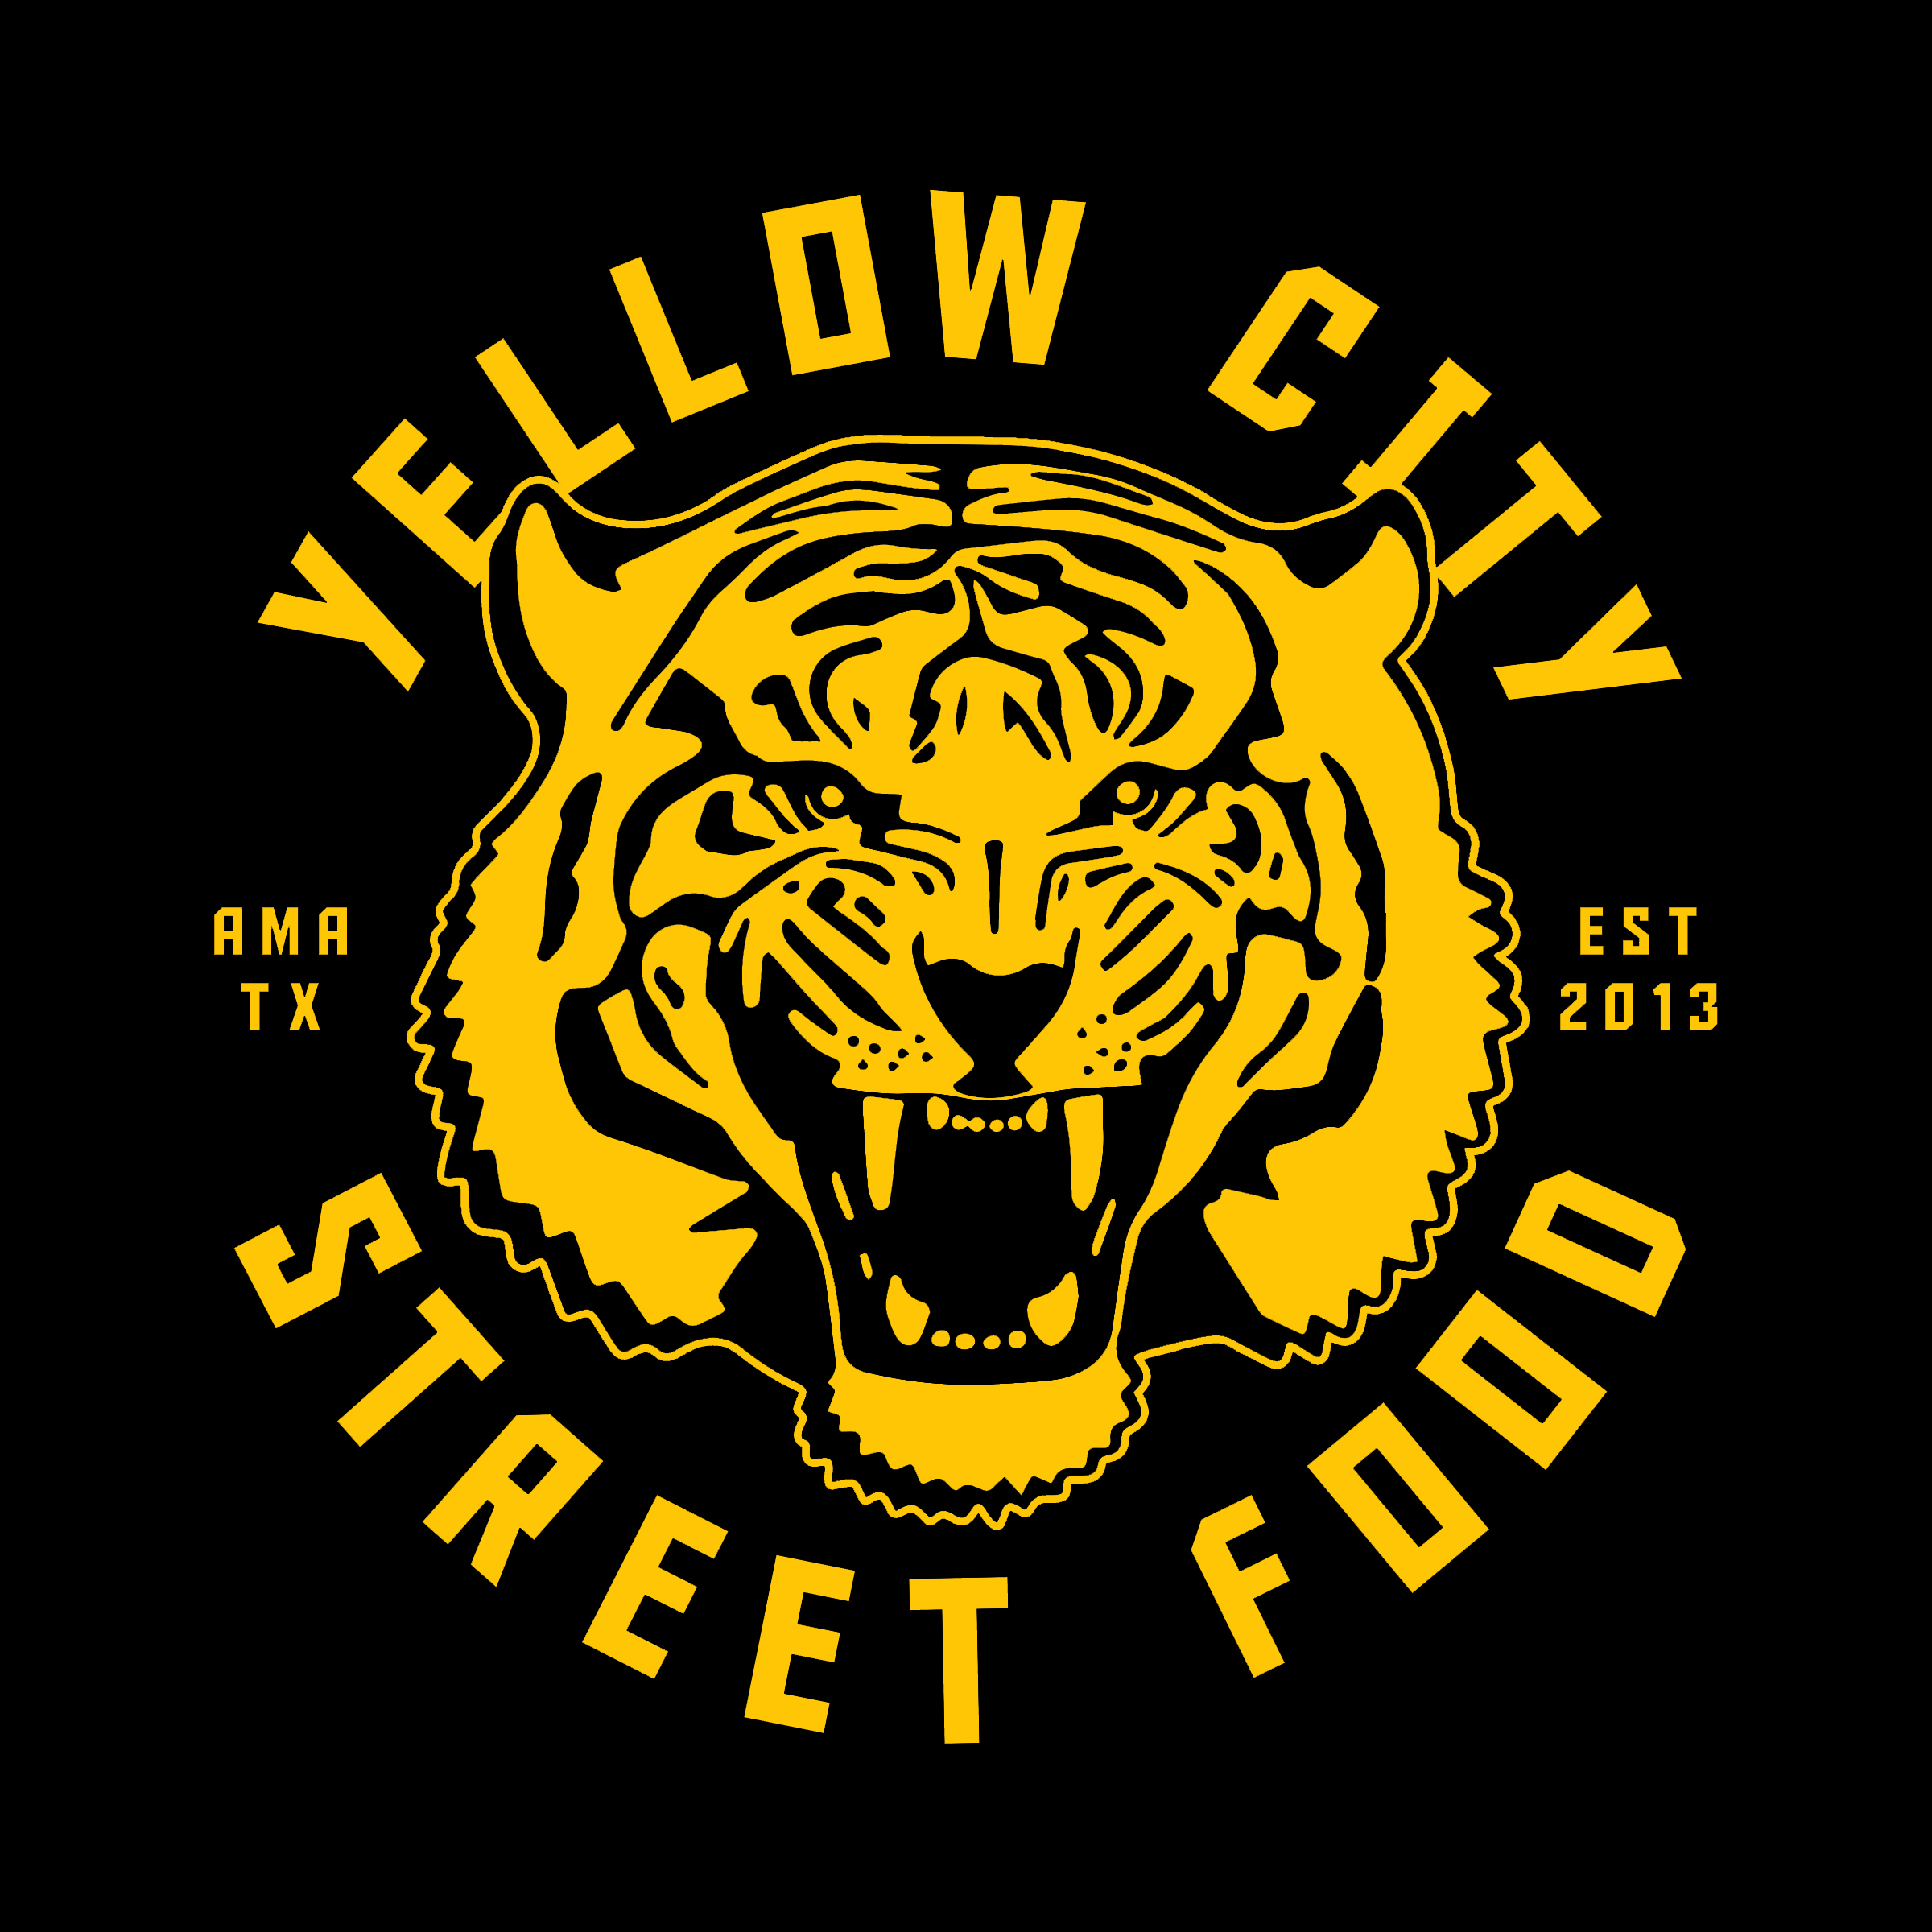 Yellow City Street Food